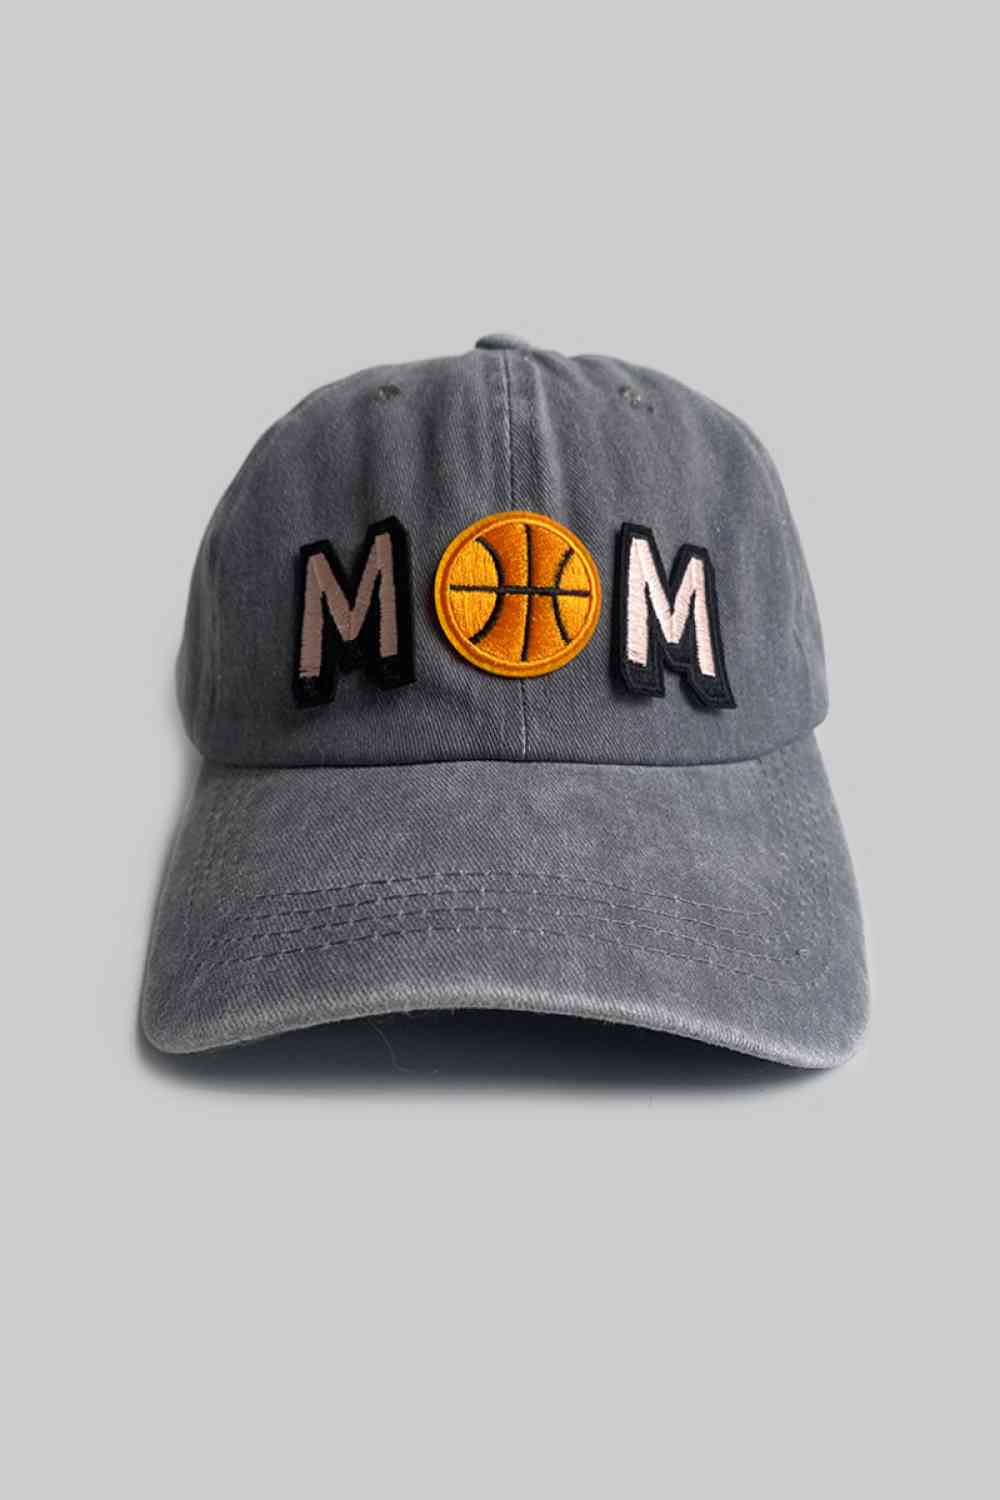 MOM Baseball Cap (Basketball)